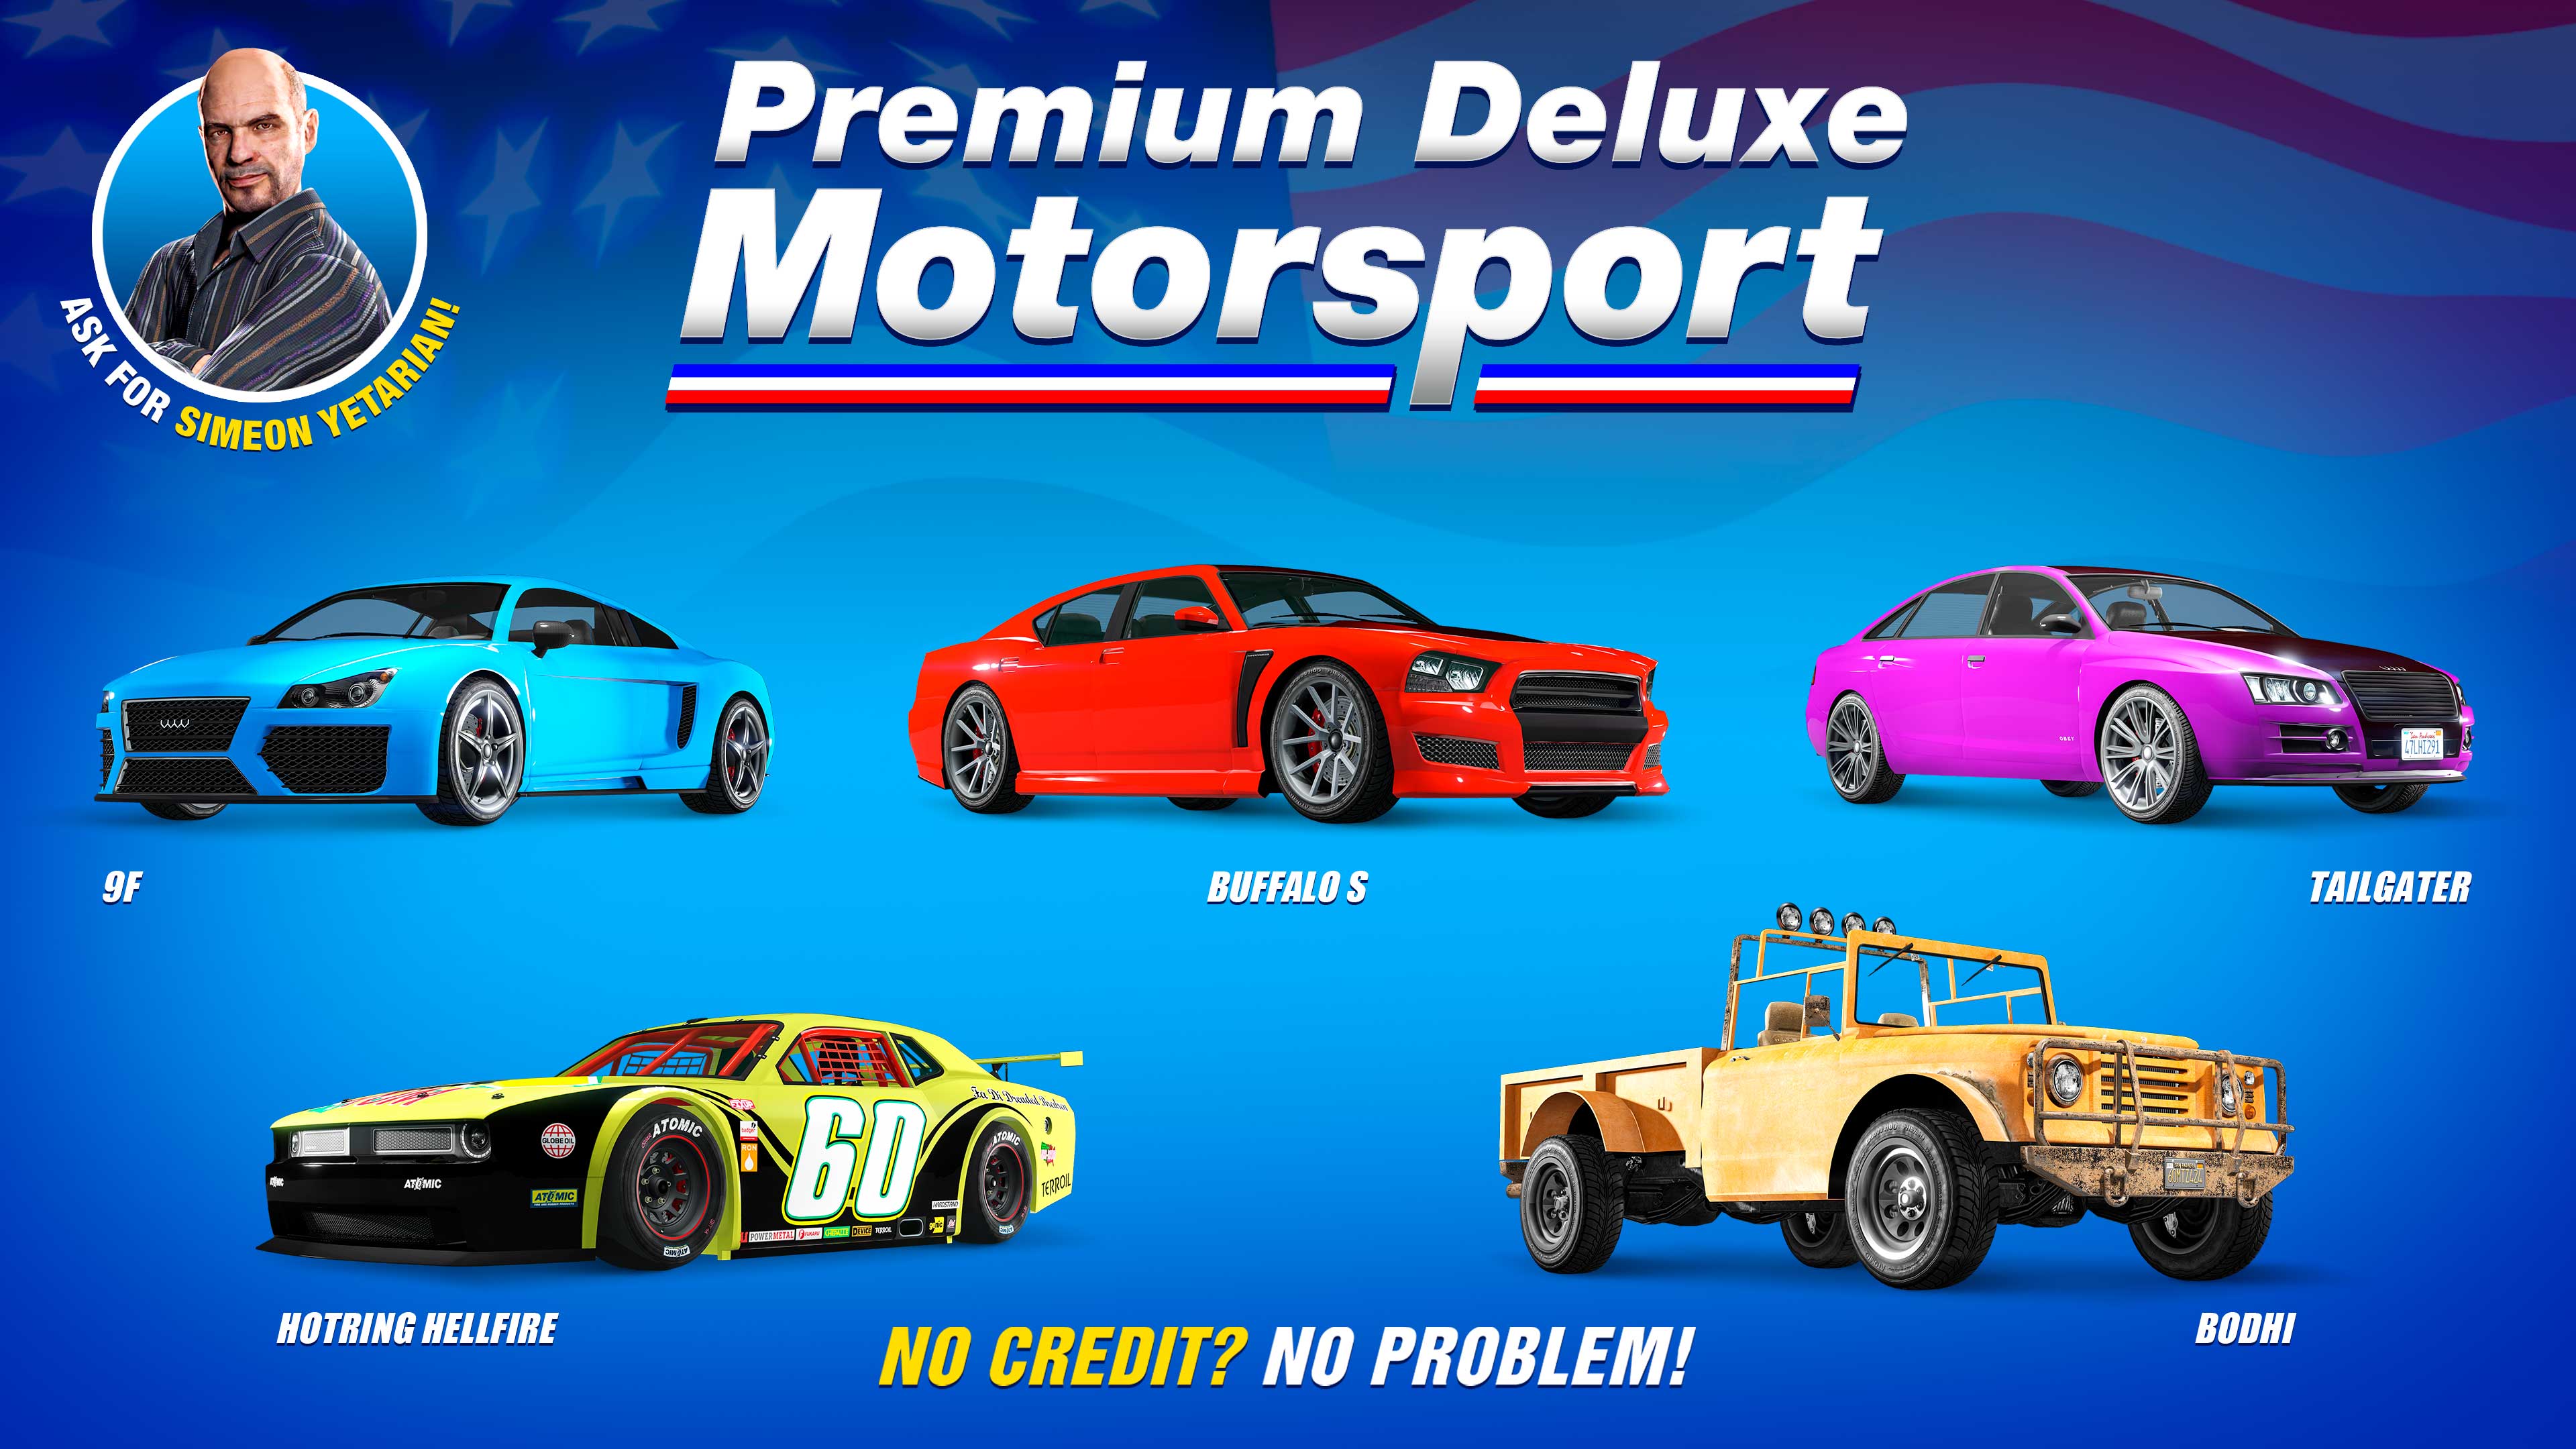 Manifesto dell'Autosalone Premium Deluxe Motorsport